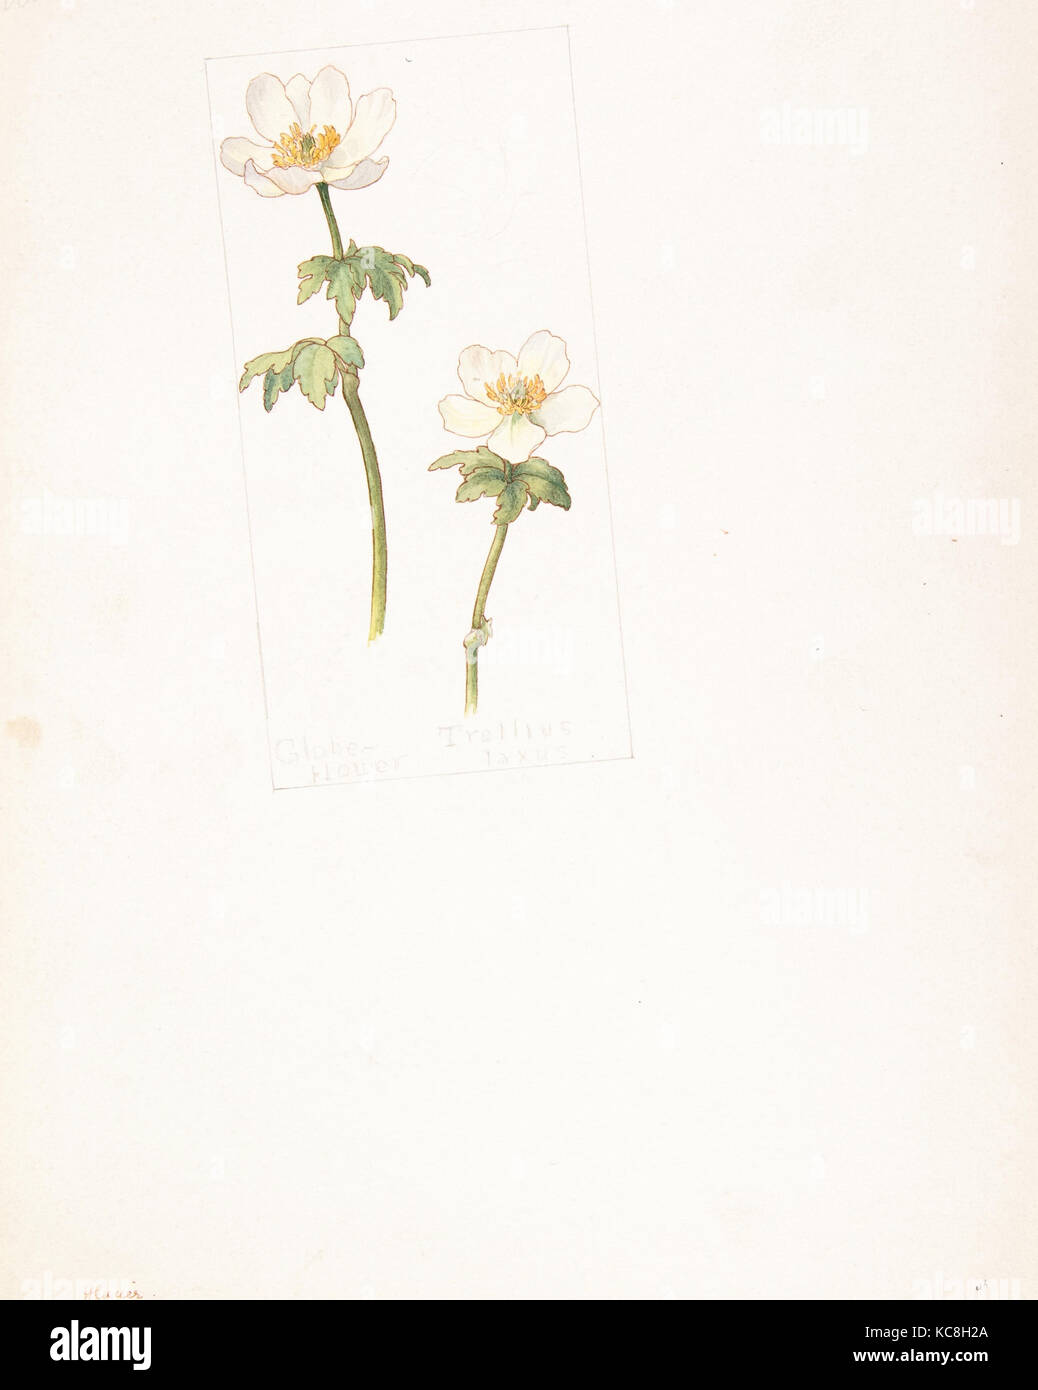 Globe flower, Trollius laxus, Margaret Neilson Armstrong, June 26, 1909 Stock Photo